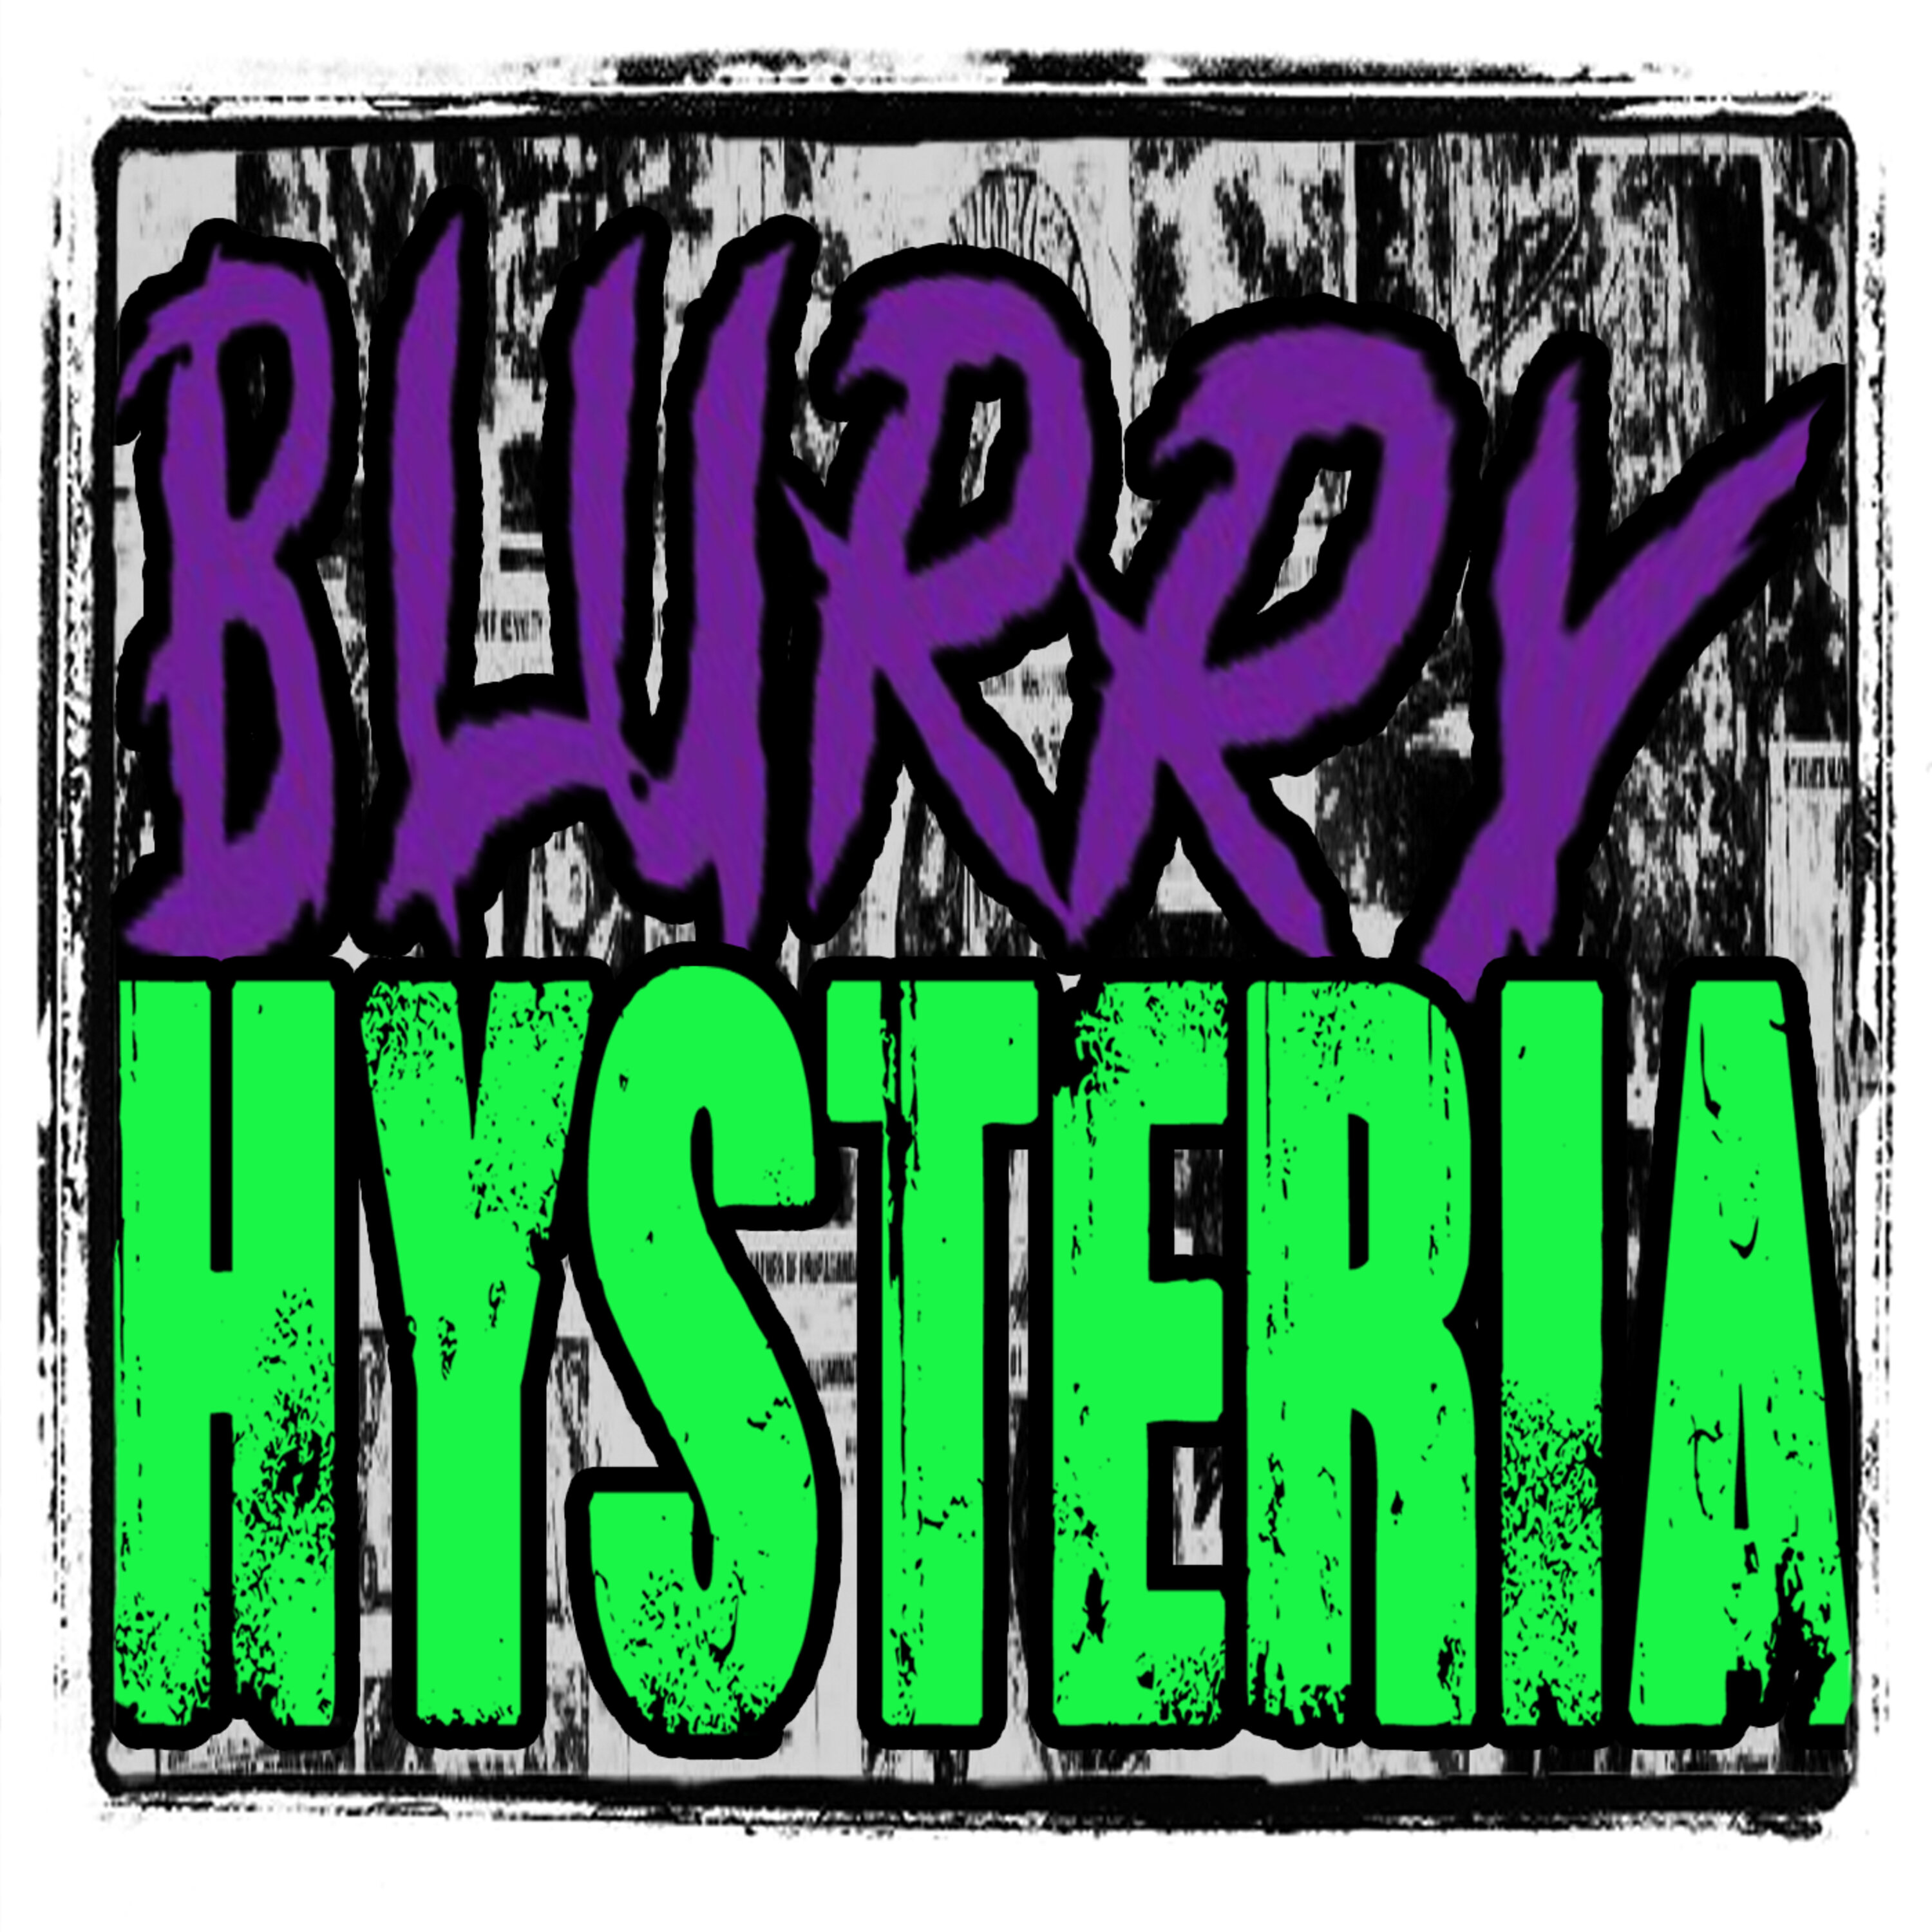 Blurry Hysteria 15: A.I. Generated Space Mammoths  | BONUS